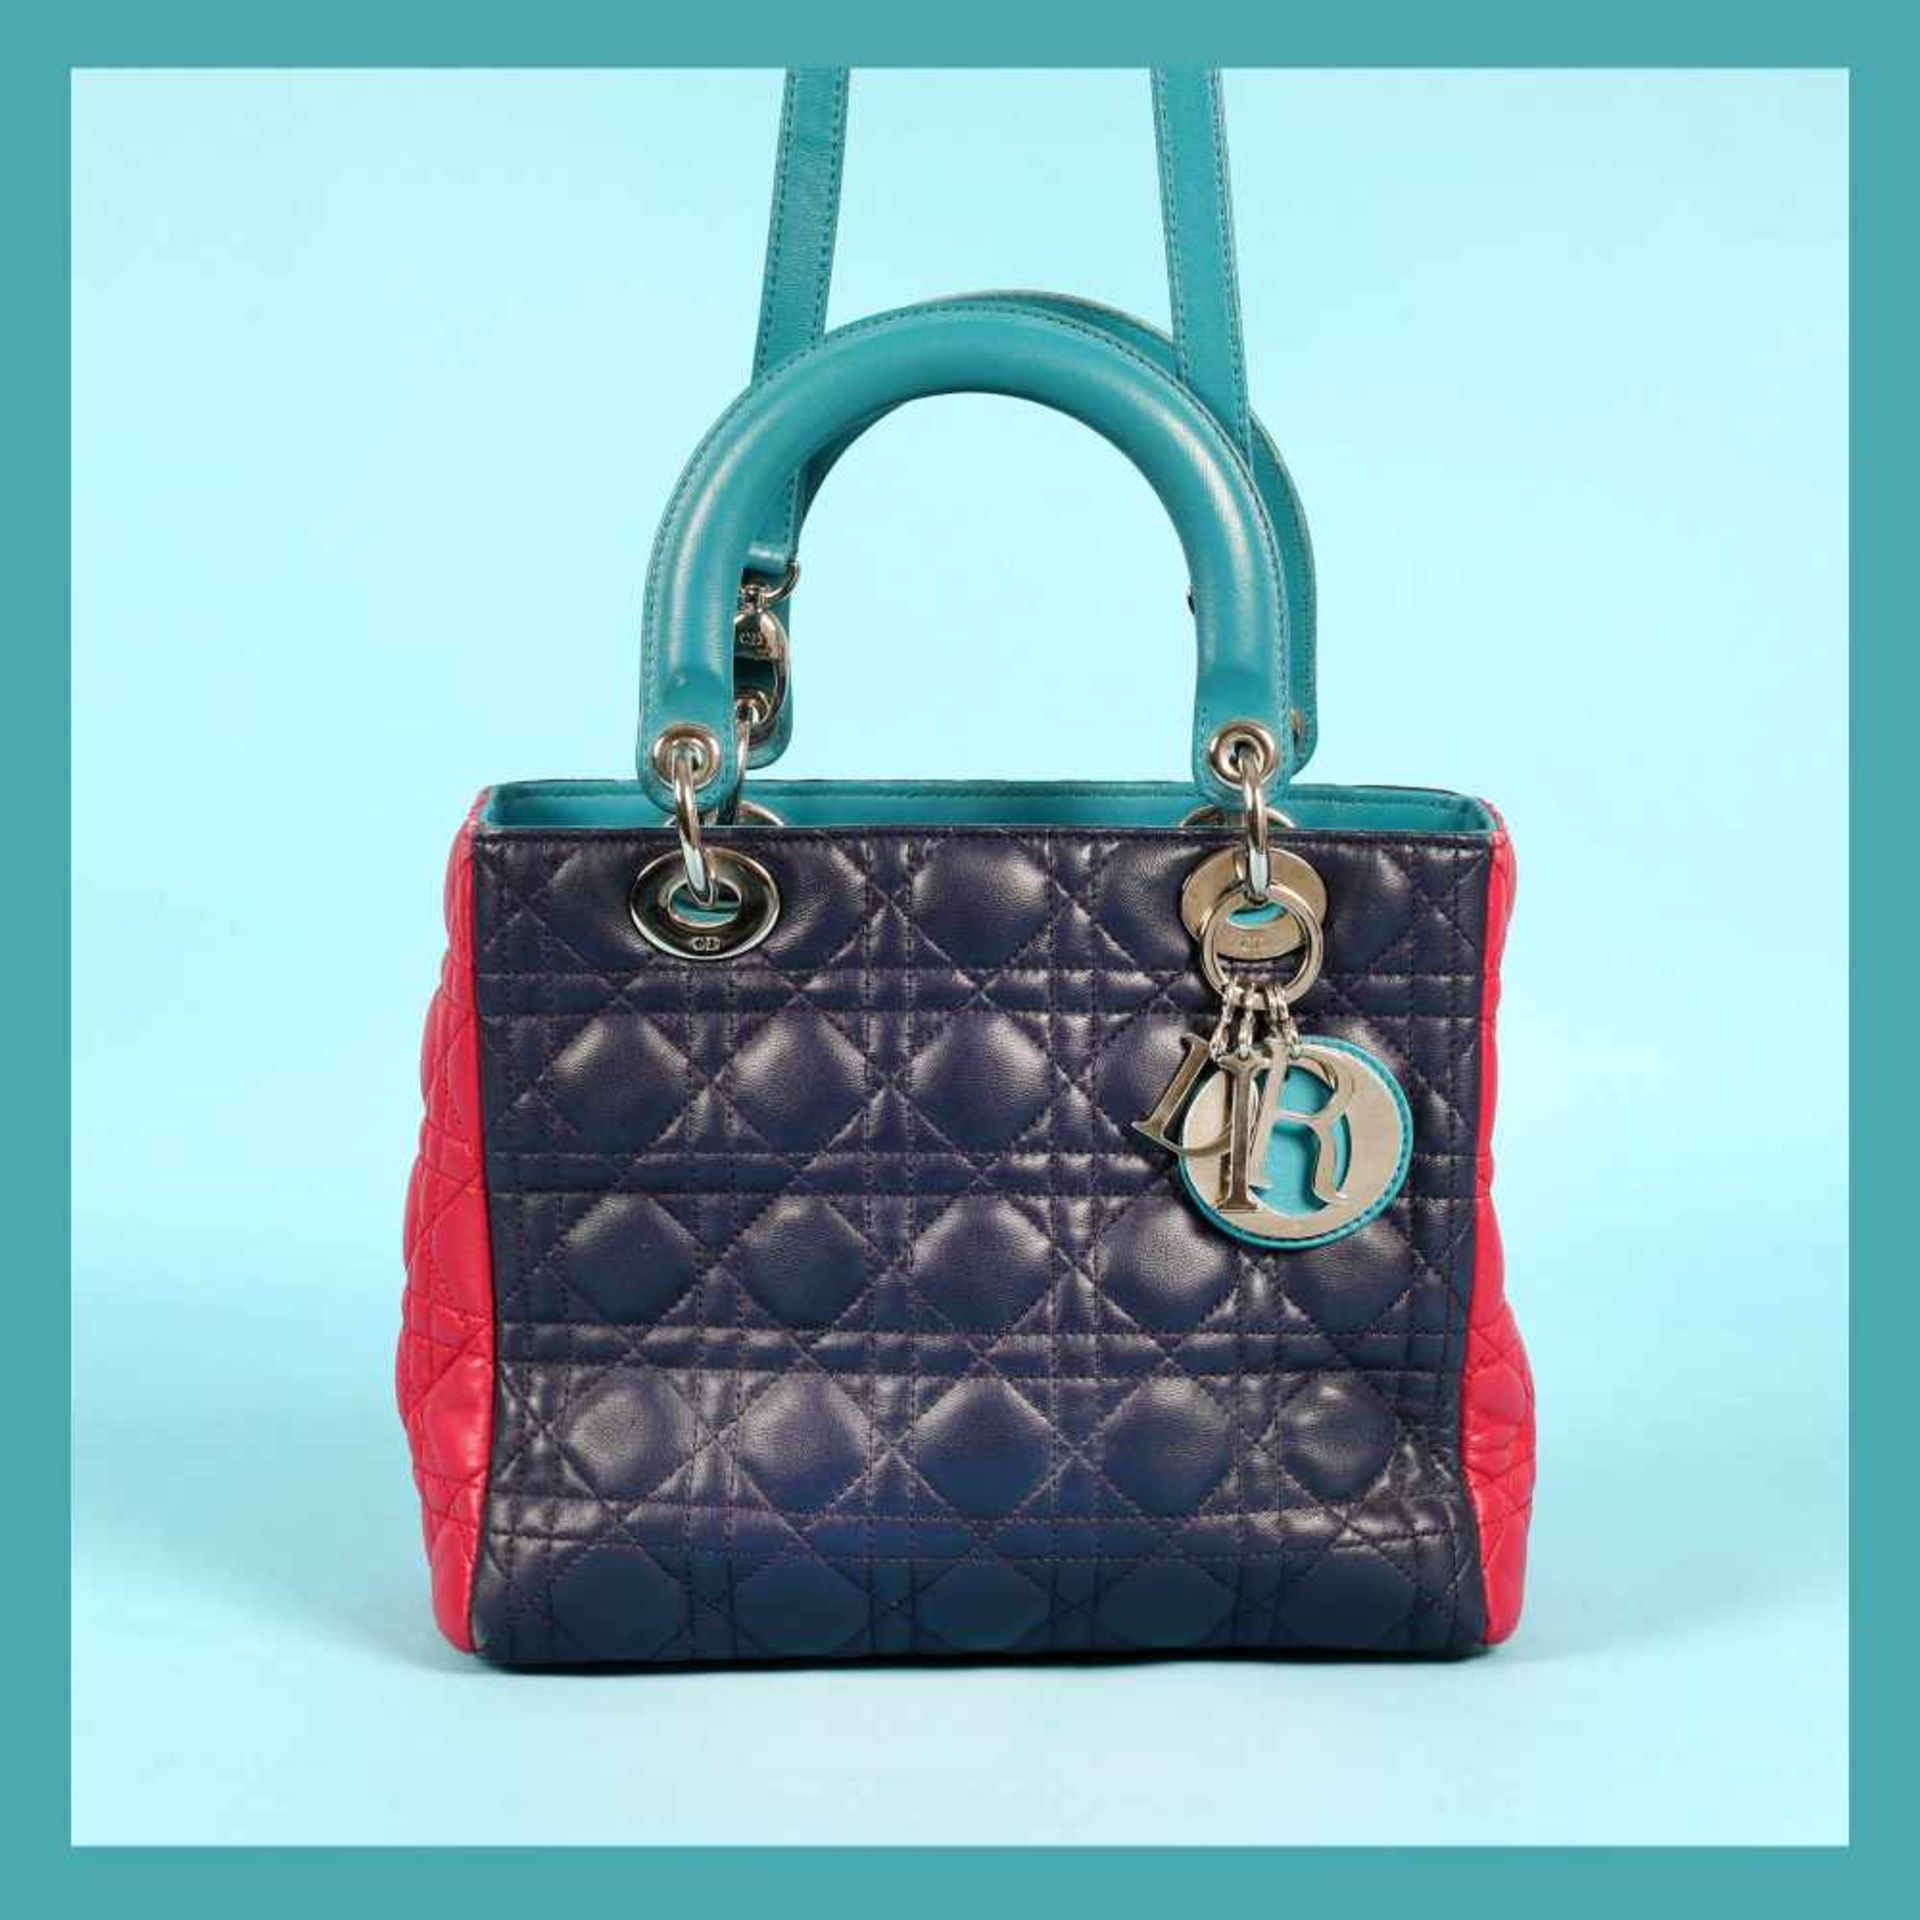 "Lady Dior" - Dior bag, leather, three colours